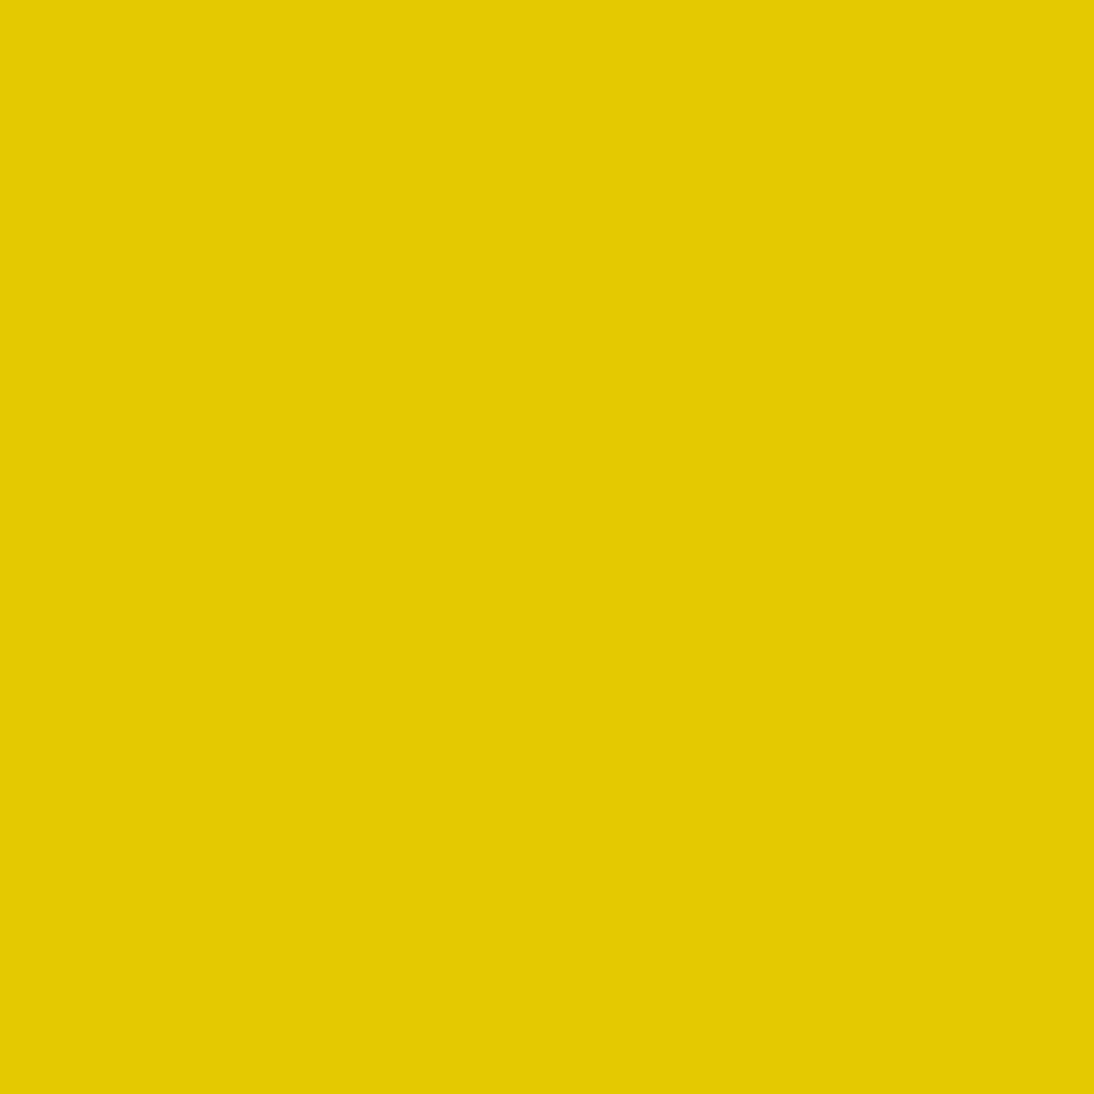 3M™ Scotchcal™ ElectroCut™ Graphic Film 7125-65, Light Lemon Yellow, 48
in x 50 yd